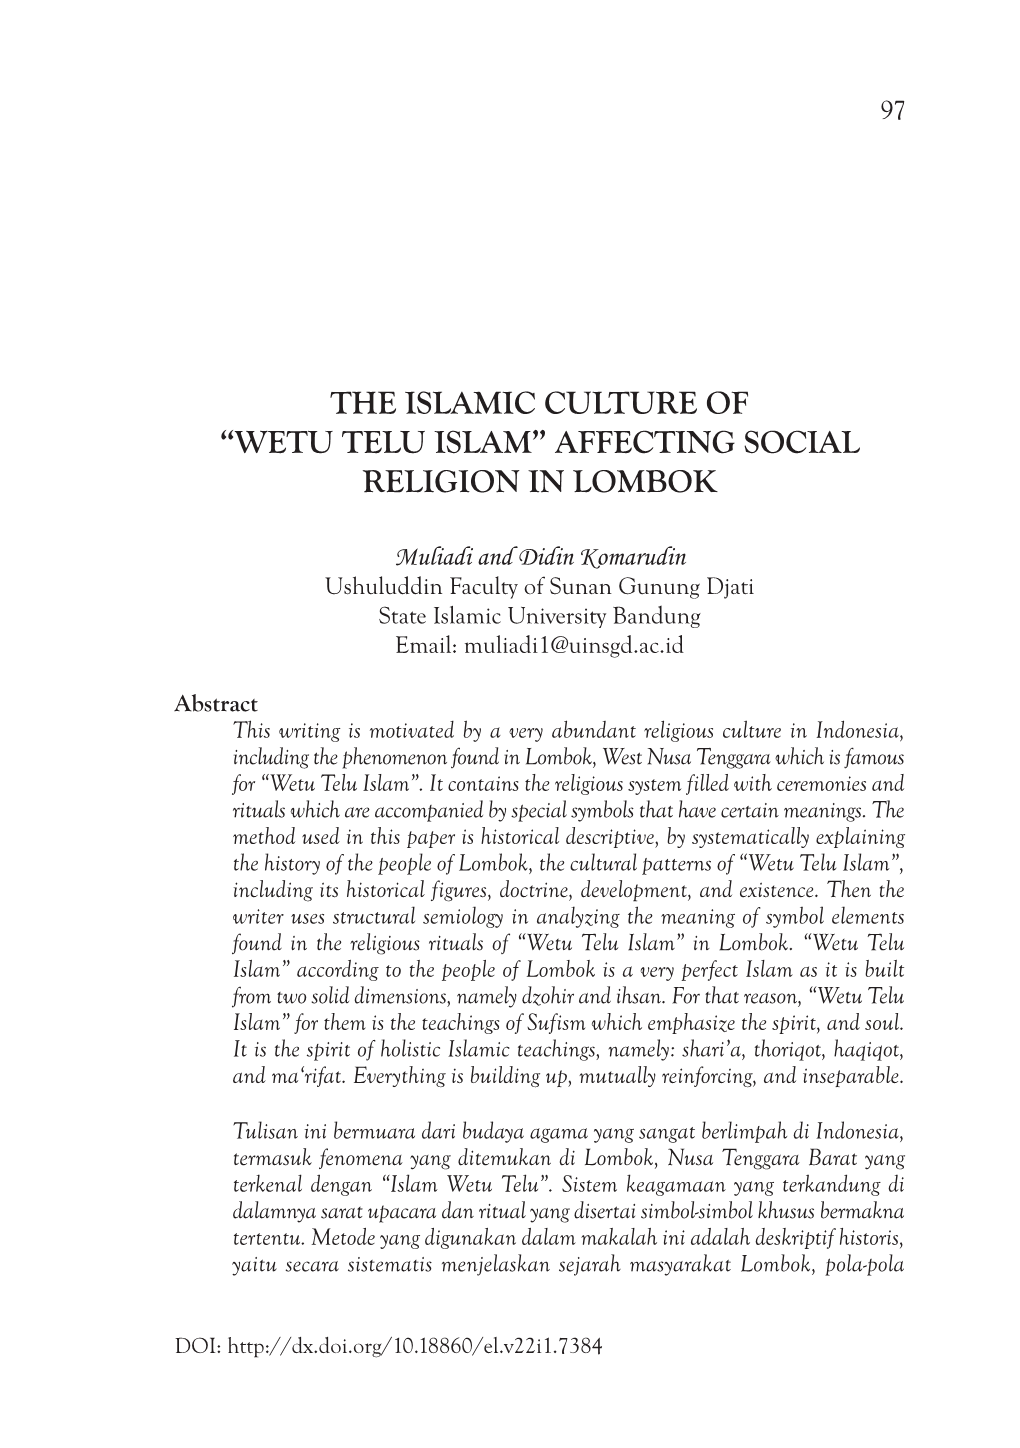 The Islamic Culture of “Wetu Telu Islam” Affecting Social Religion in Lombok